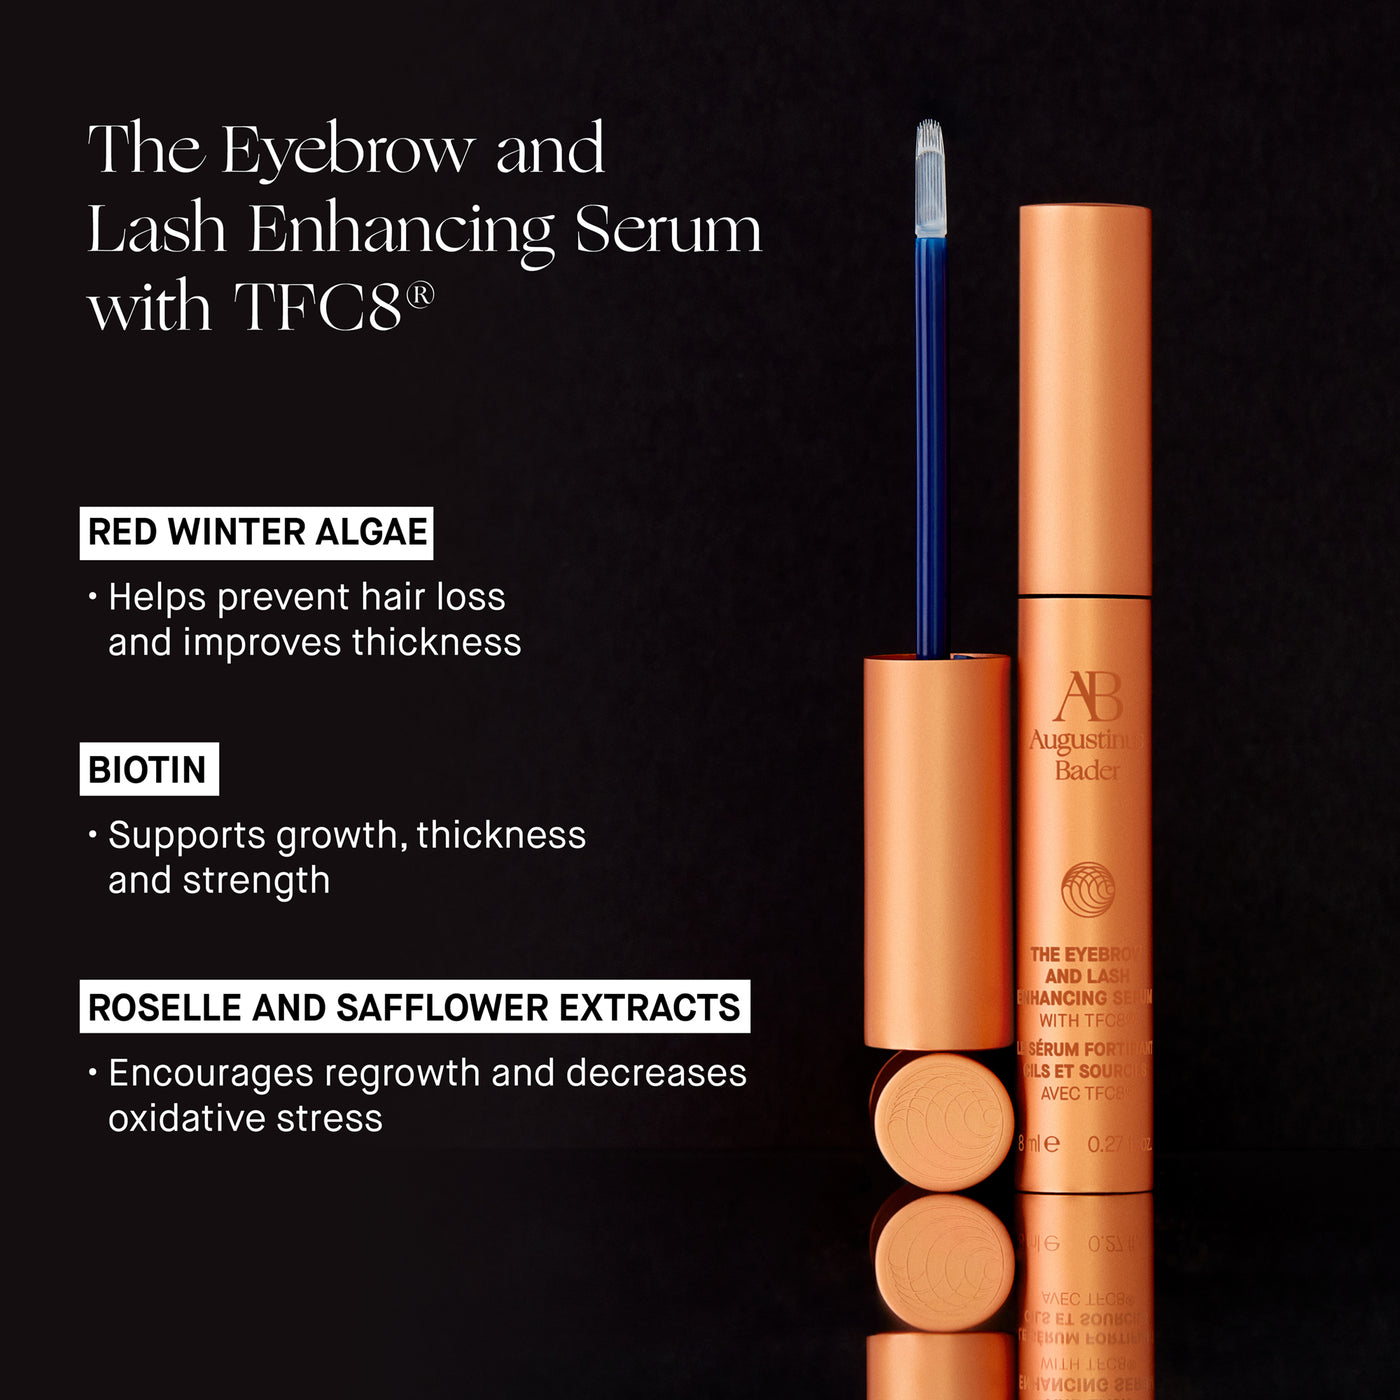 The Eyebrow and Lash Enhancing Serum